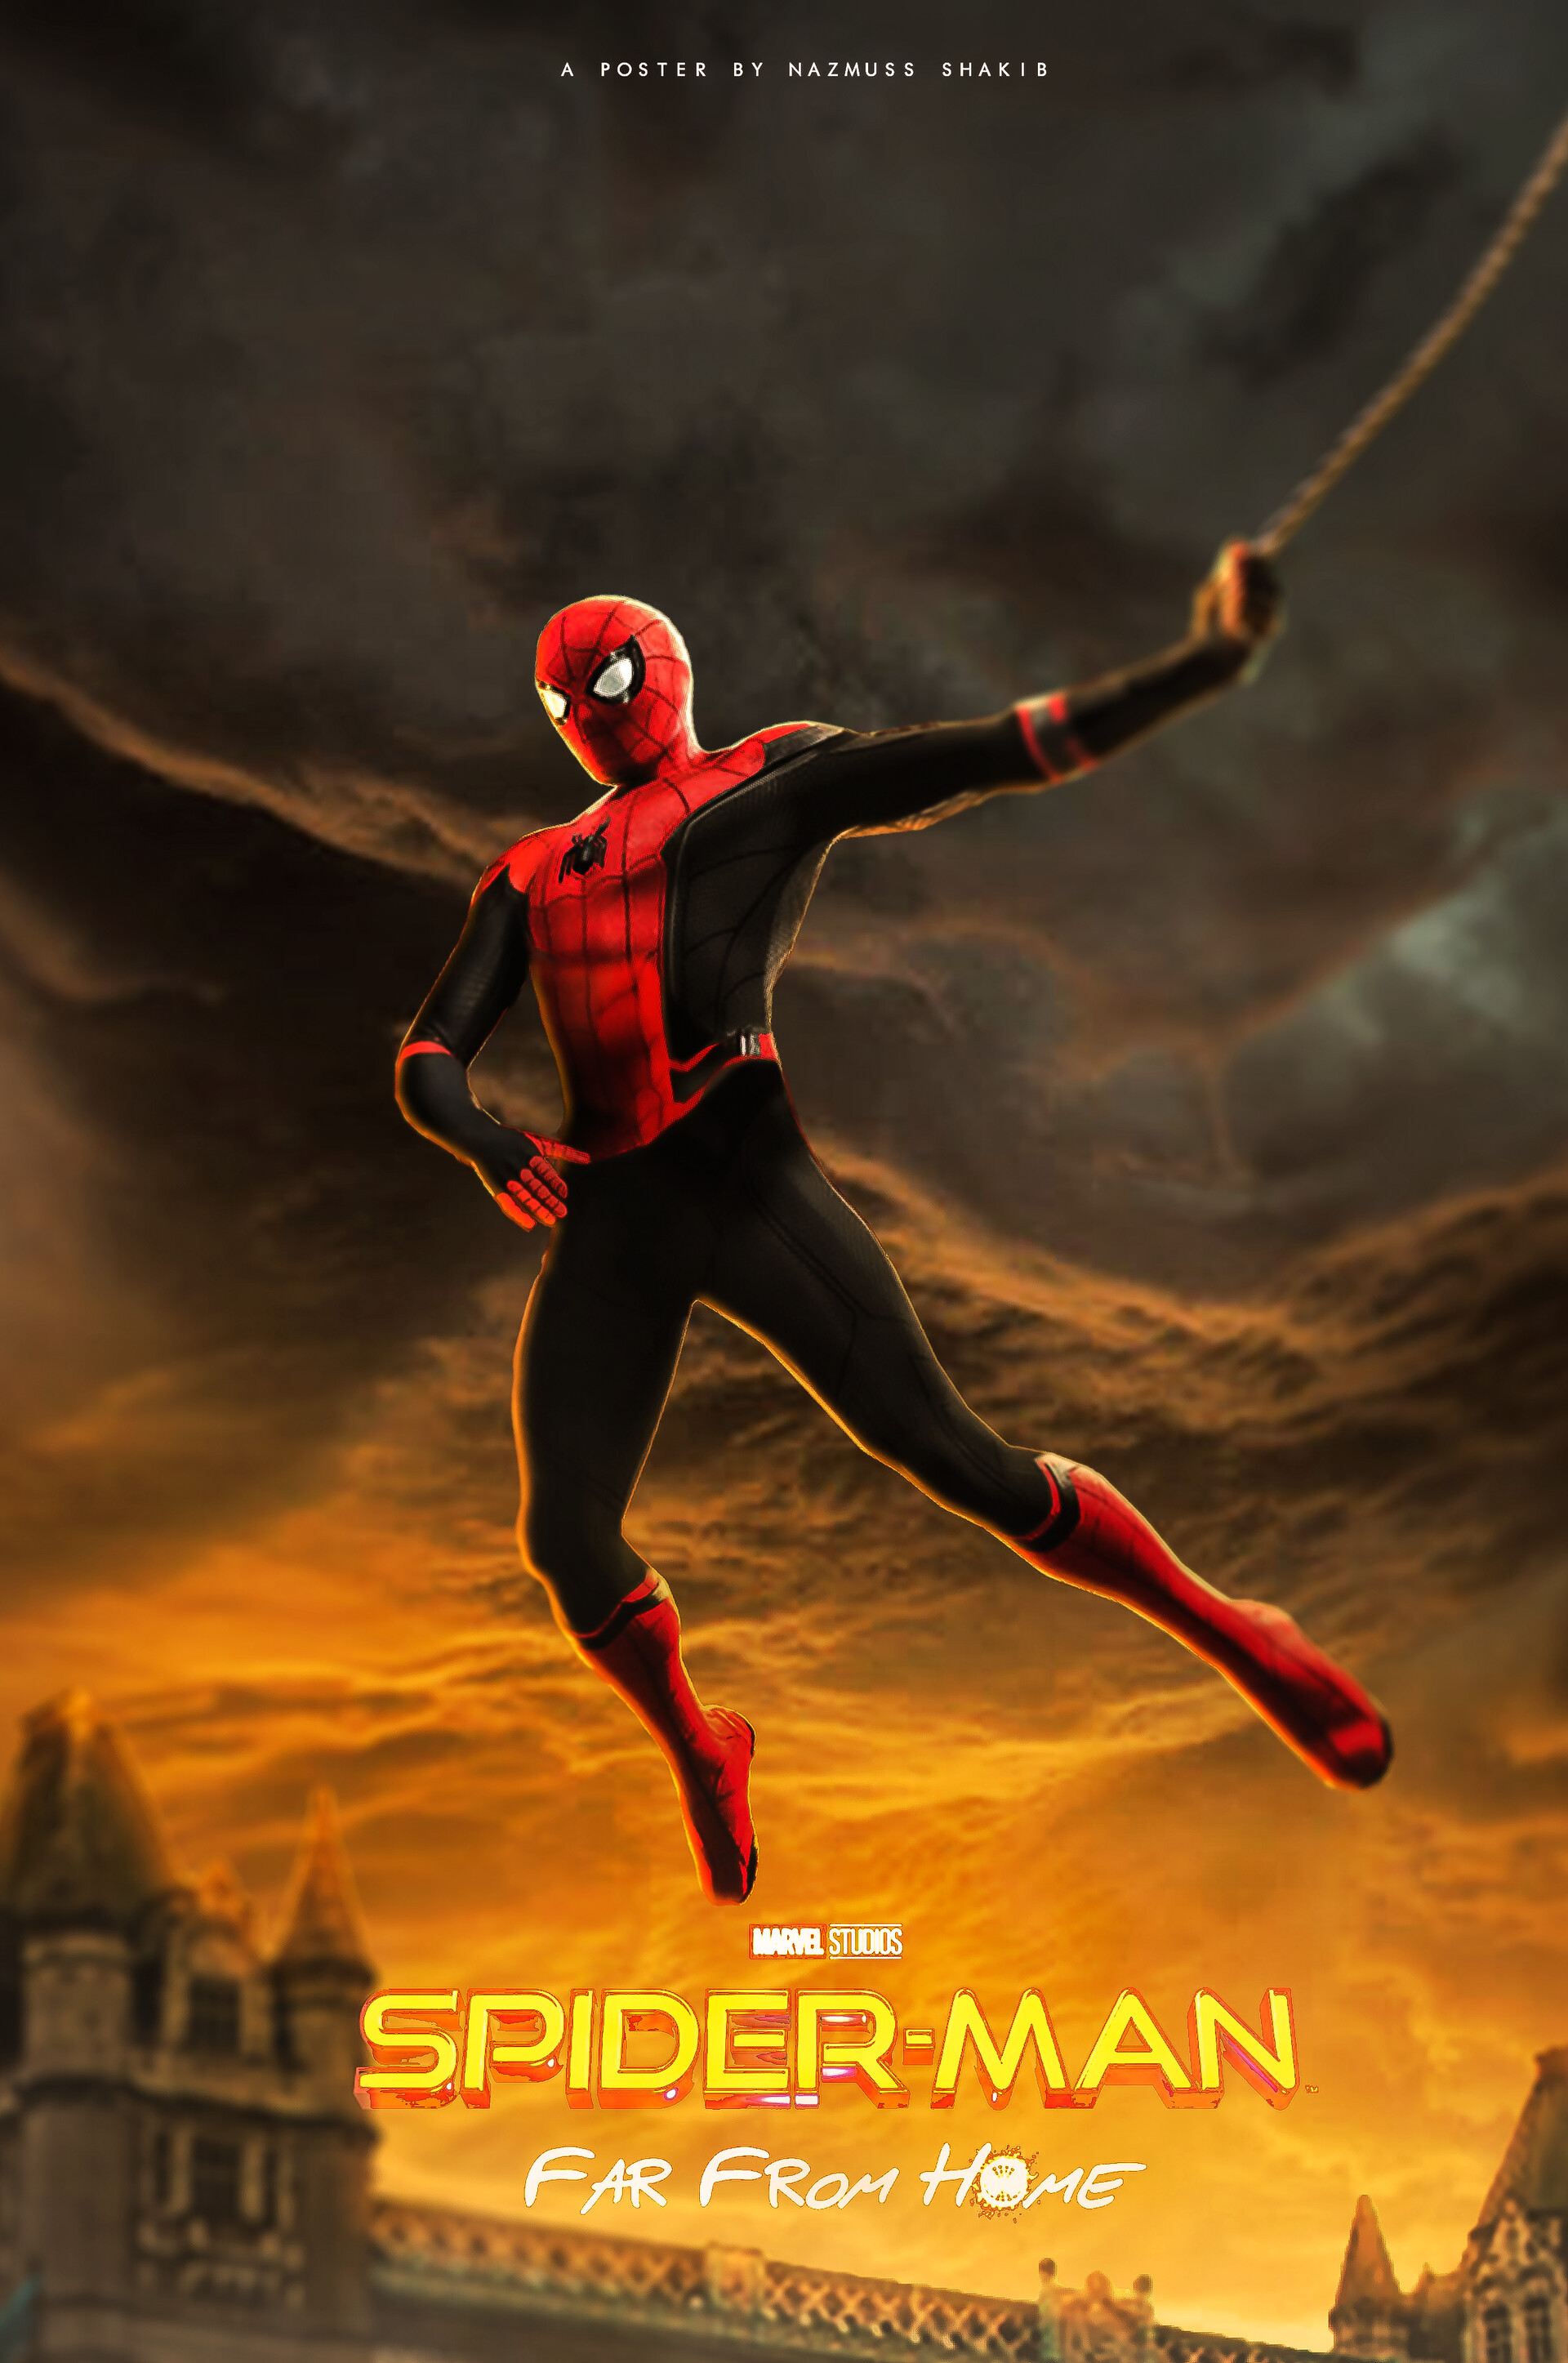 ArtStation - spiderman far from home poster